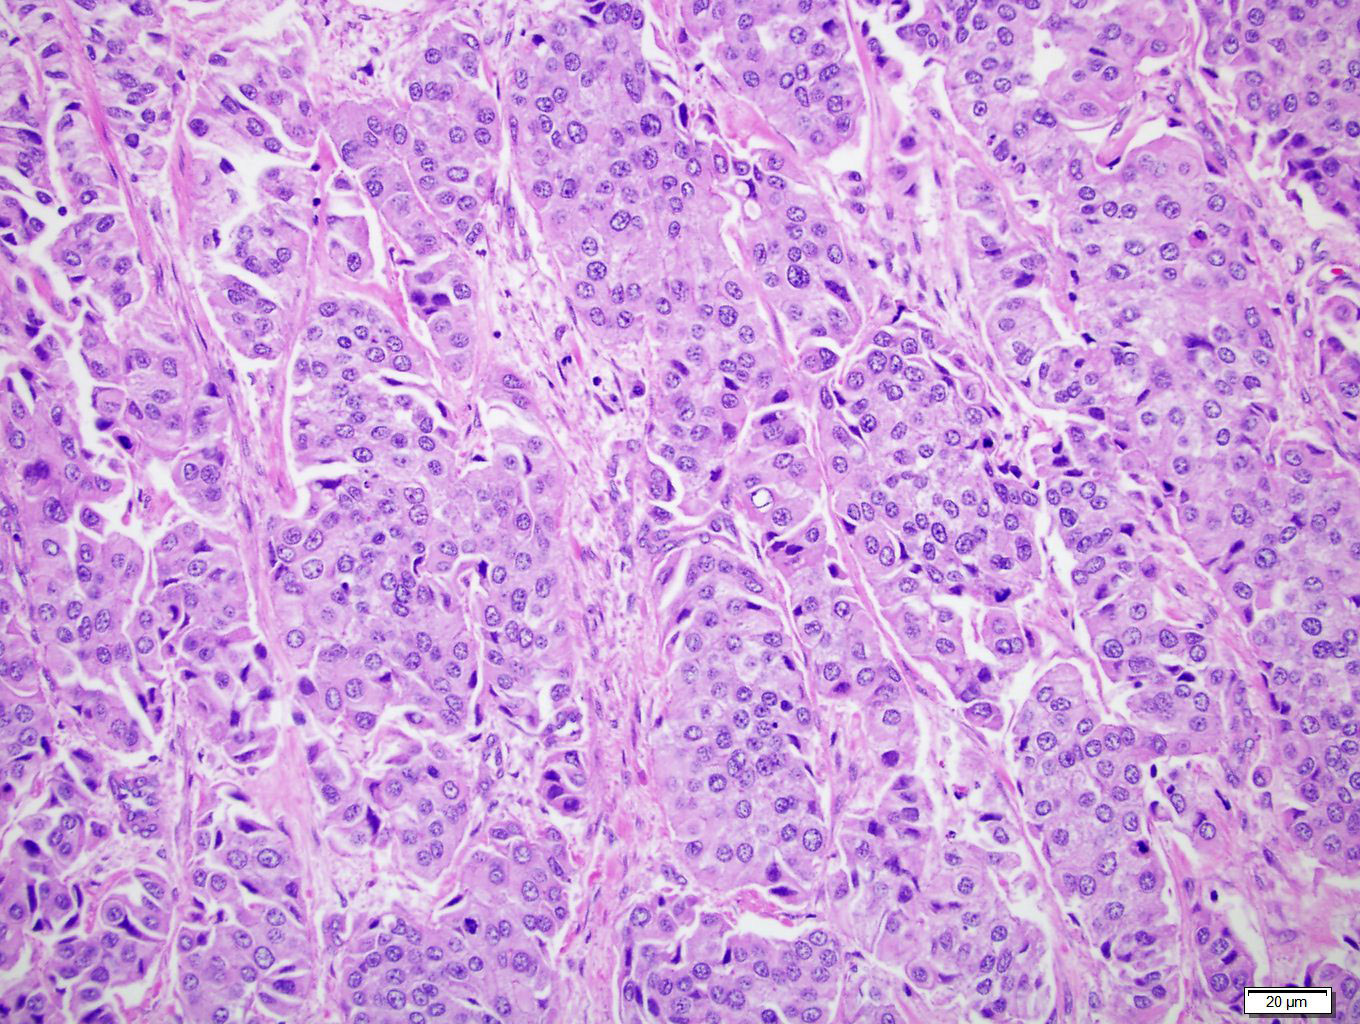 Invasive high grade urothelial carcinoma